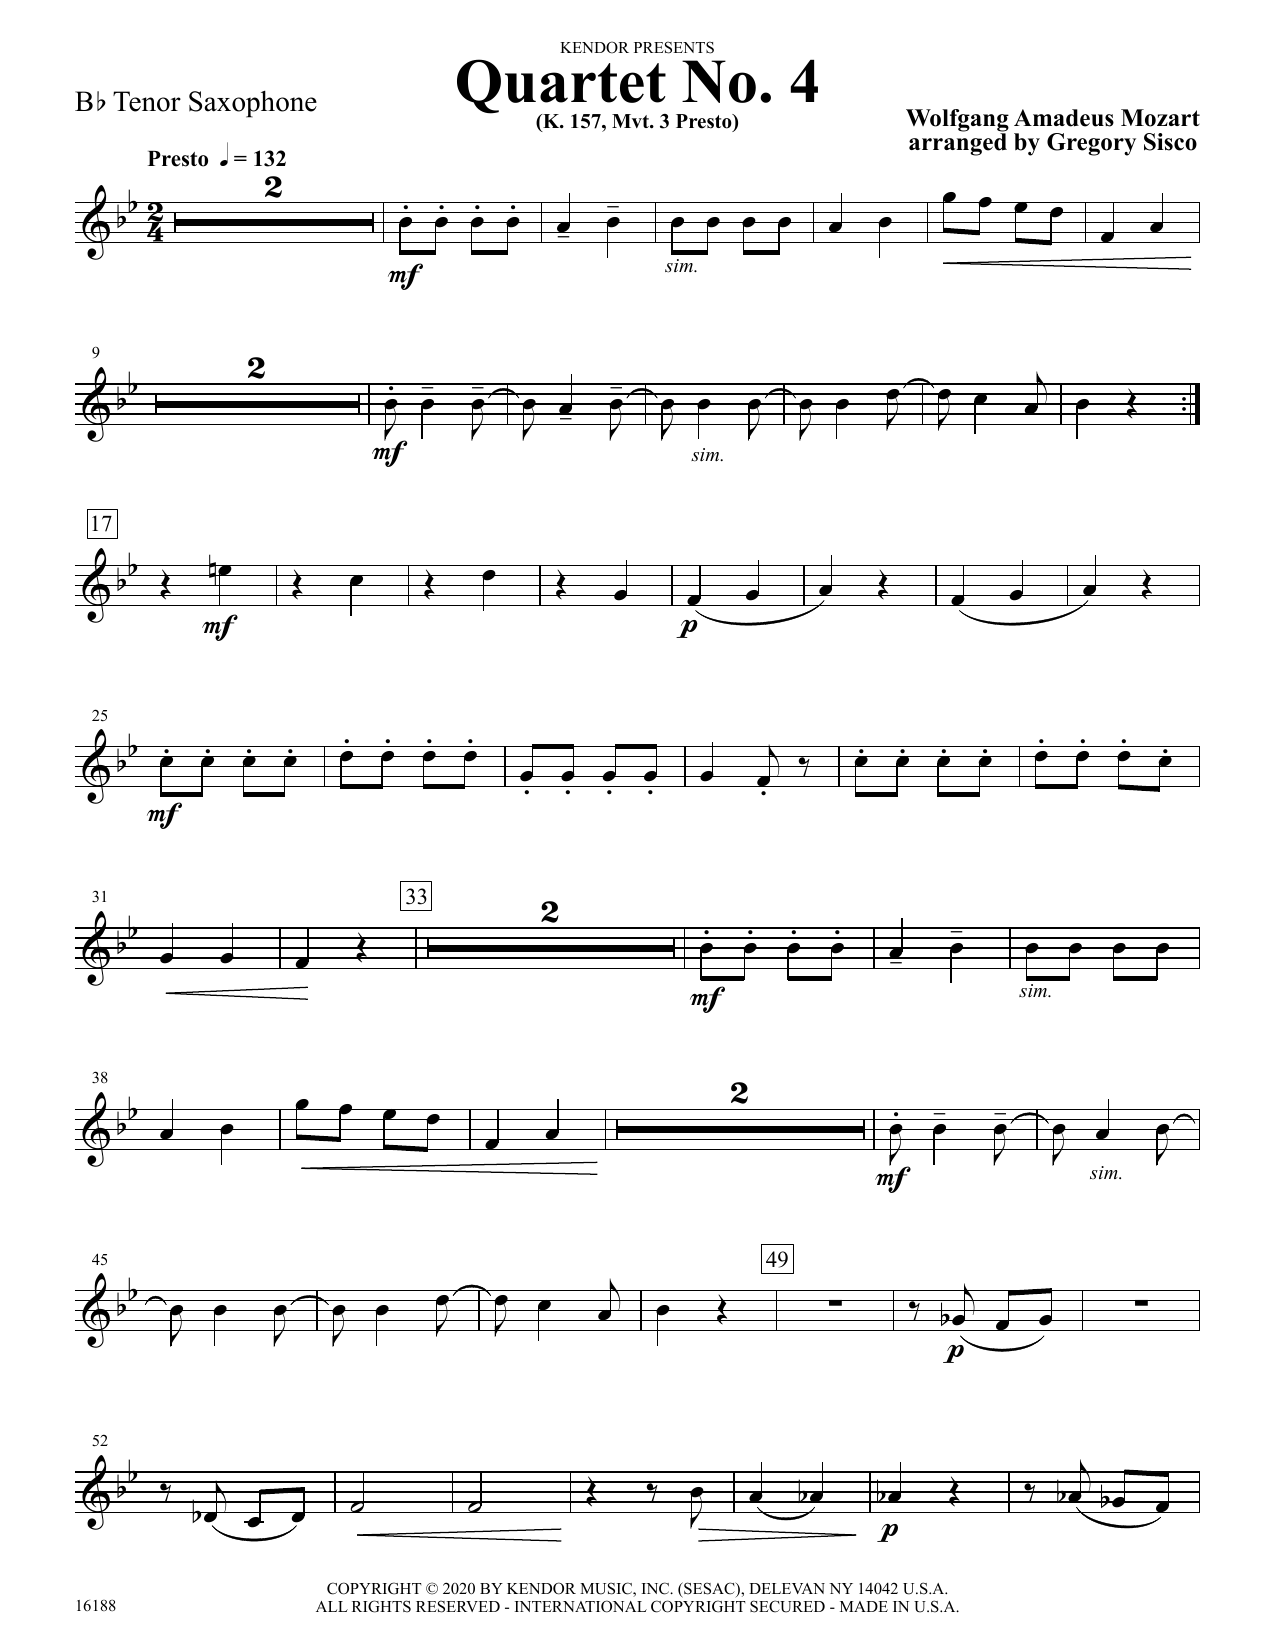 Download Wolfgang Amadeus Mozart Quartet No. 4 (K. 157, Mvt. 3 Presto) ( Sheet Music